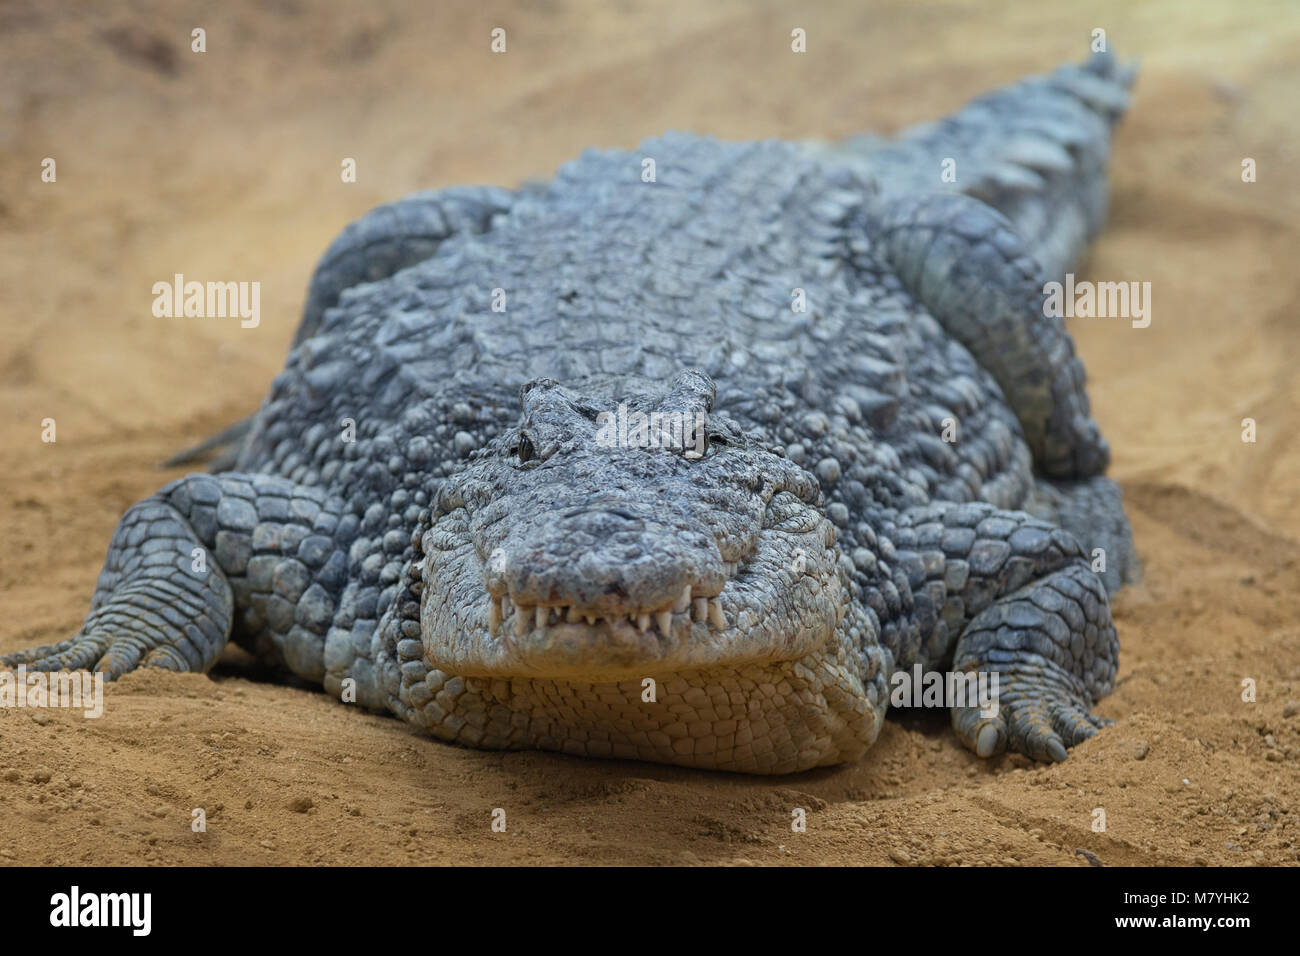 Male nile crocodile resting in the sand Stock Photo